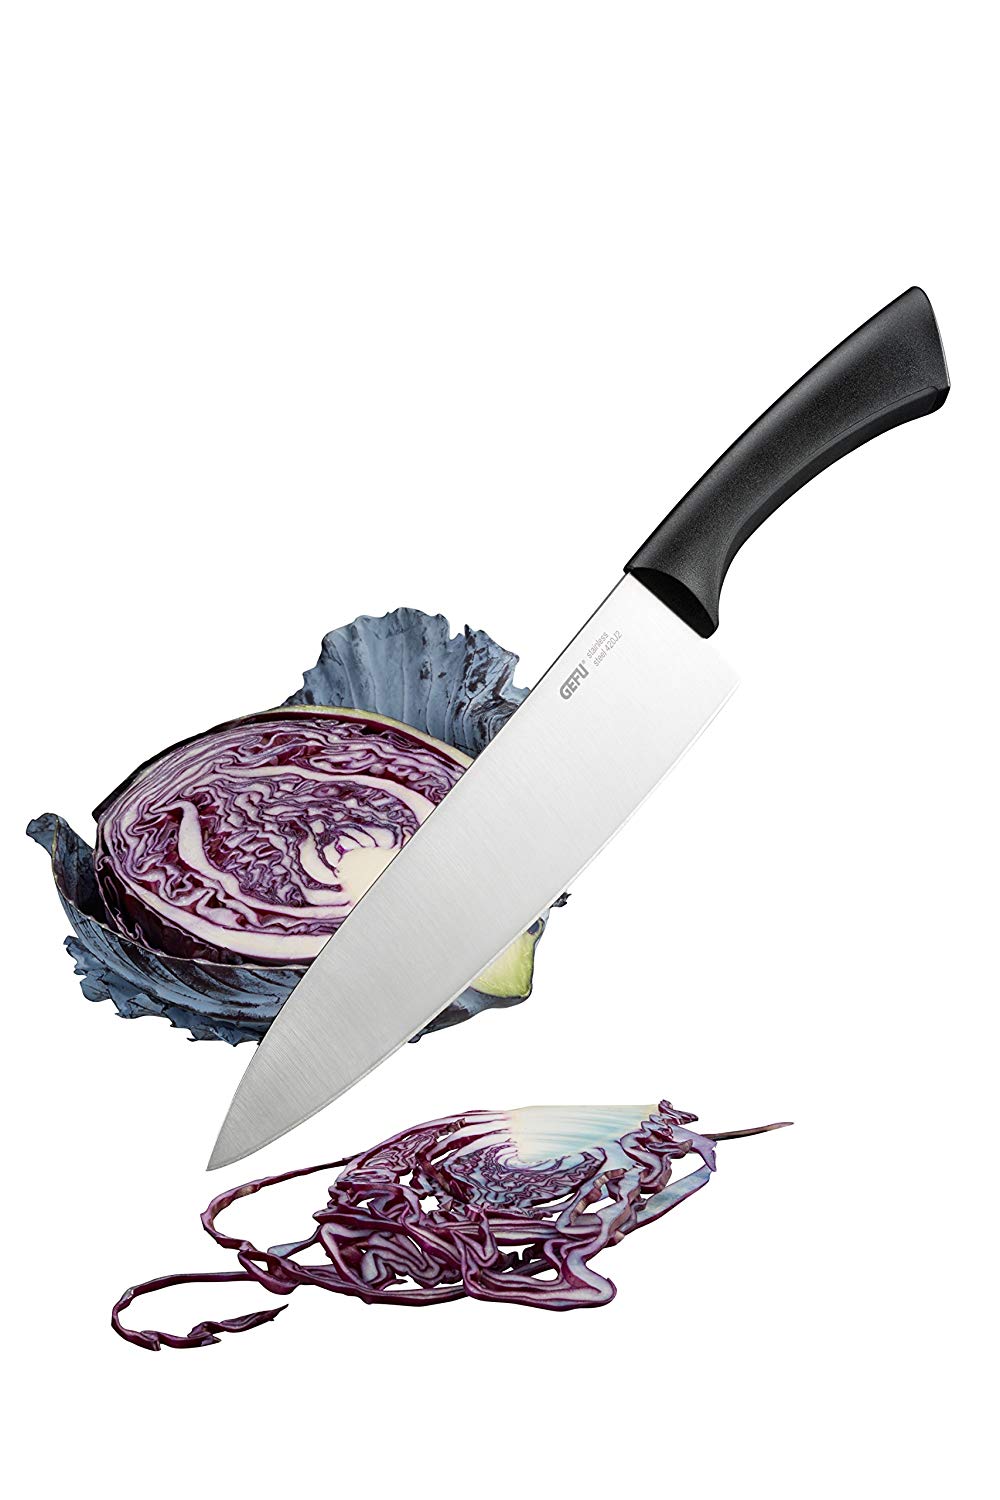 GEFU The Chefs Knife Senso "X 2.4 X 4.6 Cm